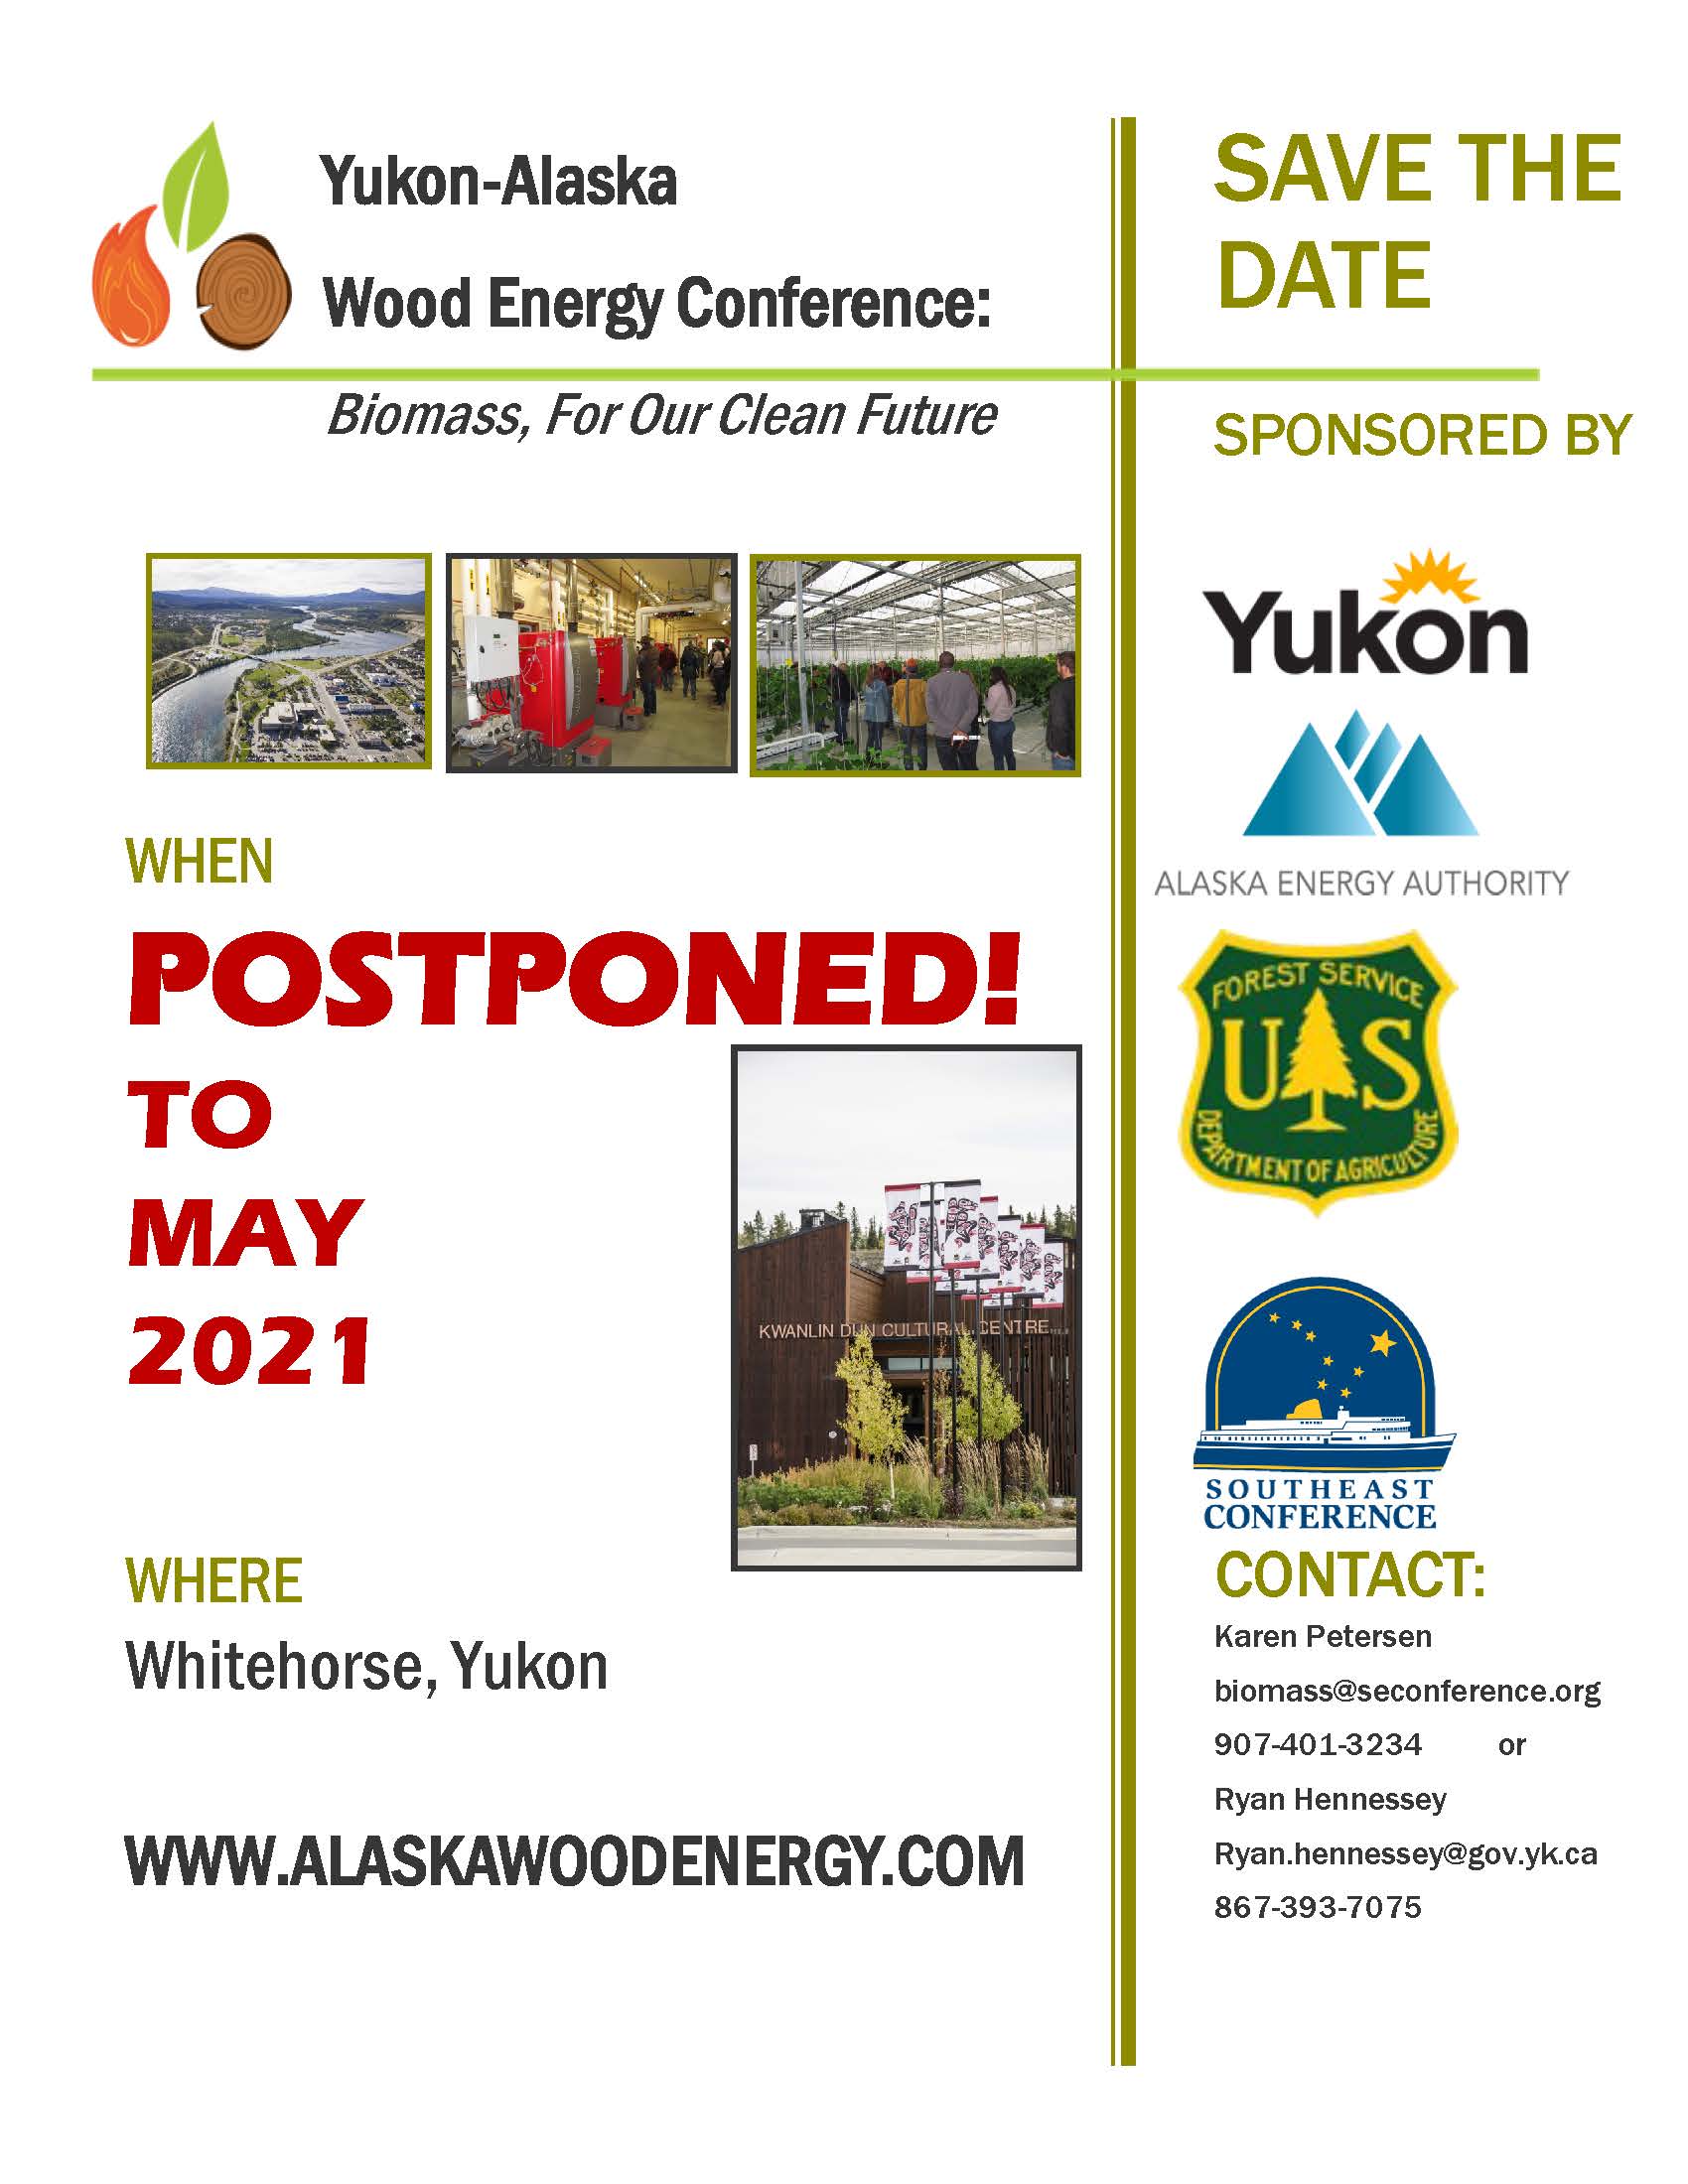 Yukon-Alaska Wood Energy Conference Postponed